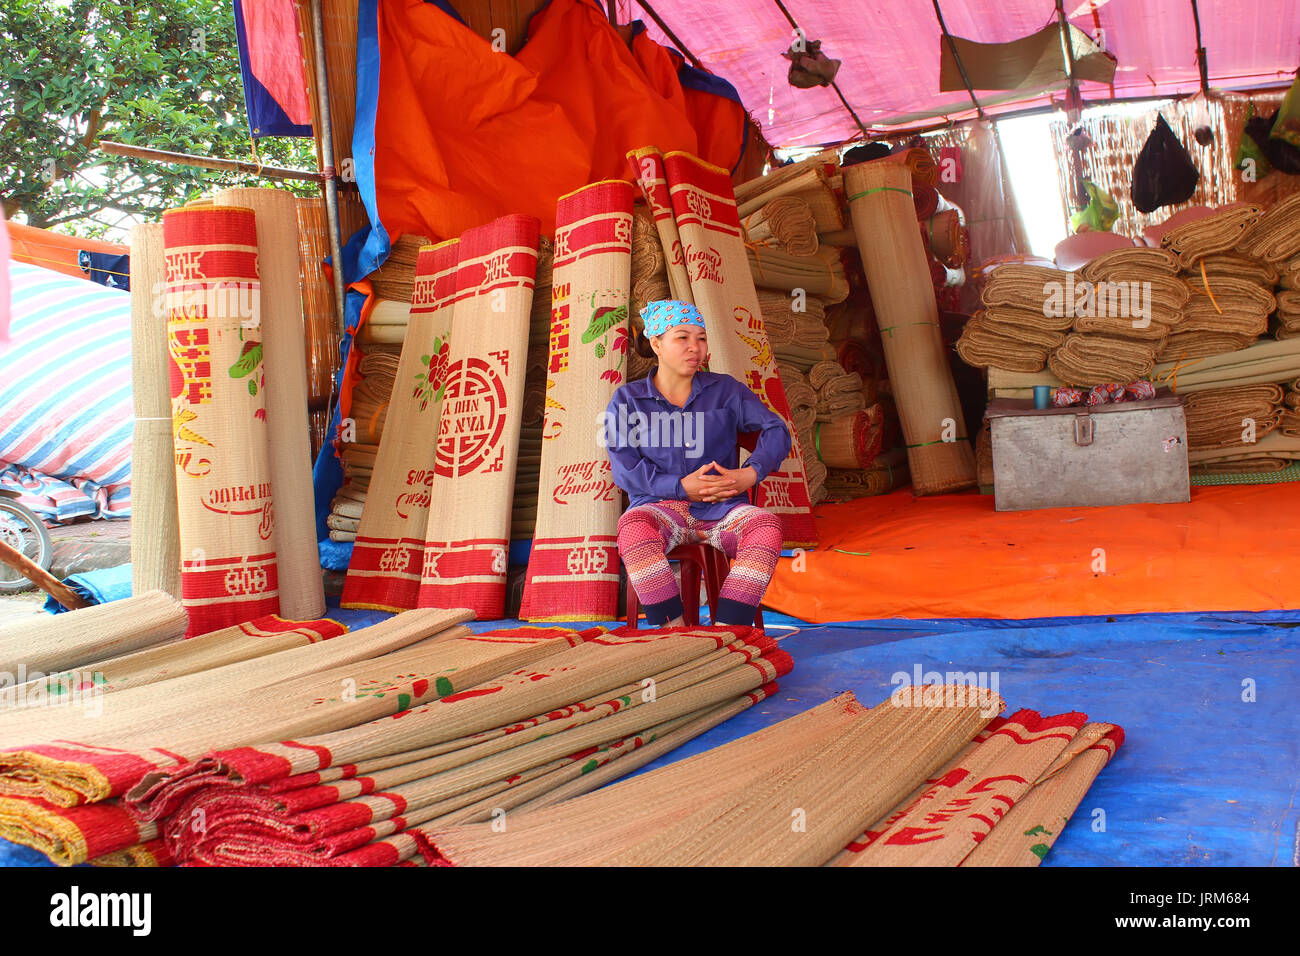 HAI DUONG, VIETNAM, SEPTEMBER, 3: people at Market selling bed mats on September, 3, 2014 in Hai Duong, Vietnam Stock Photo